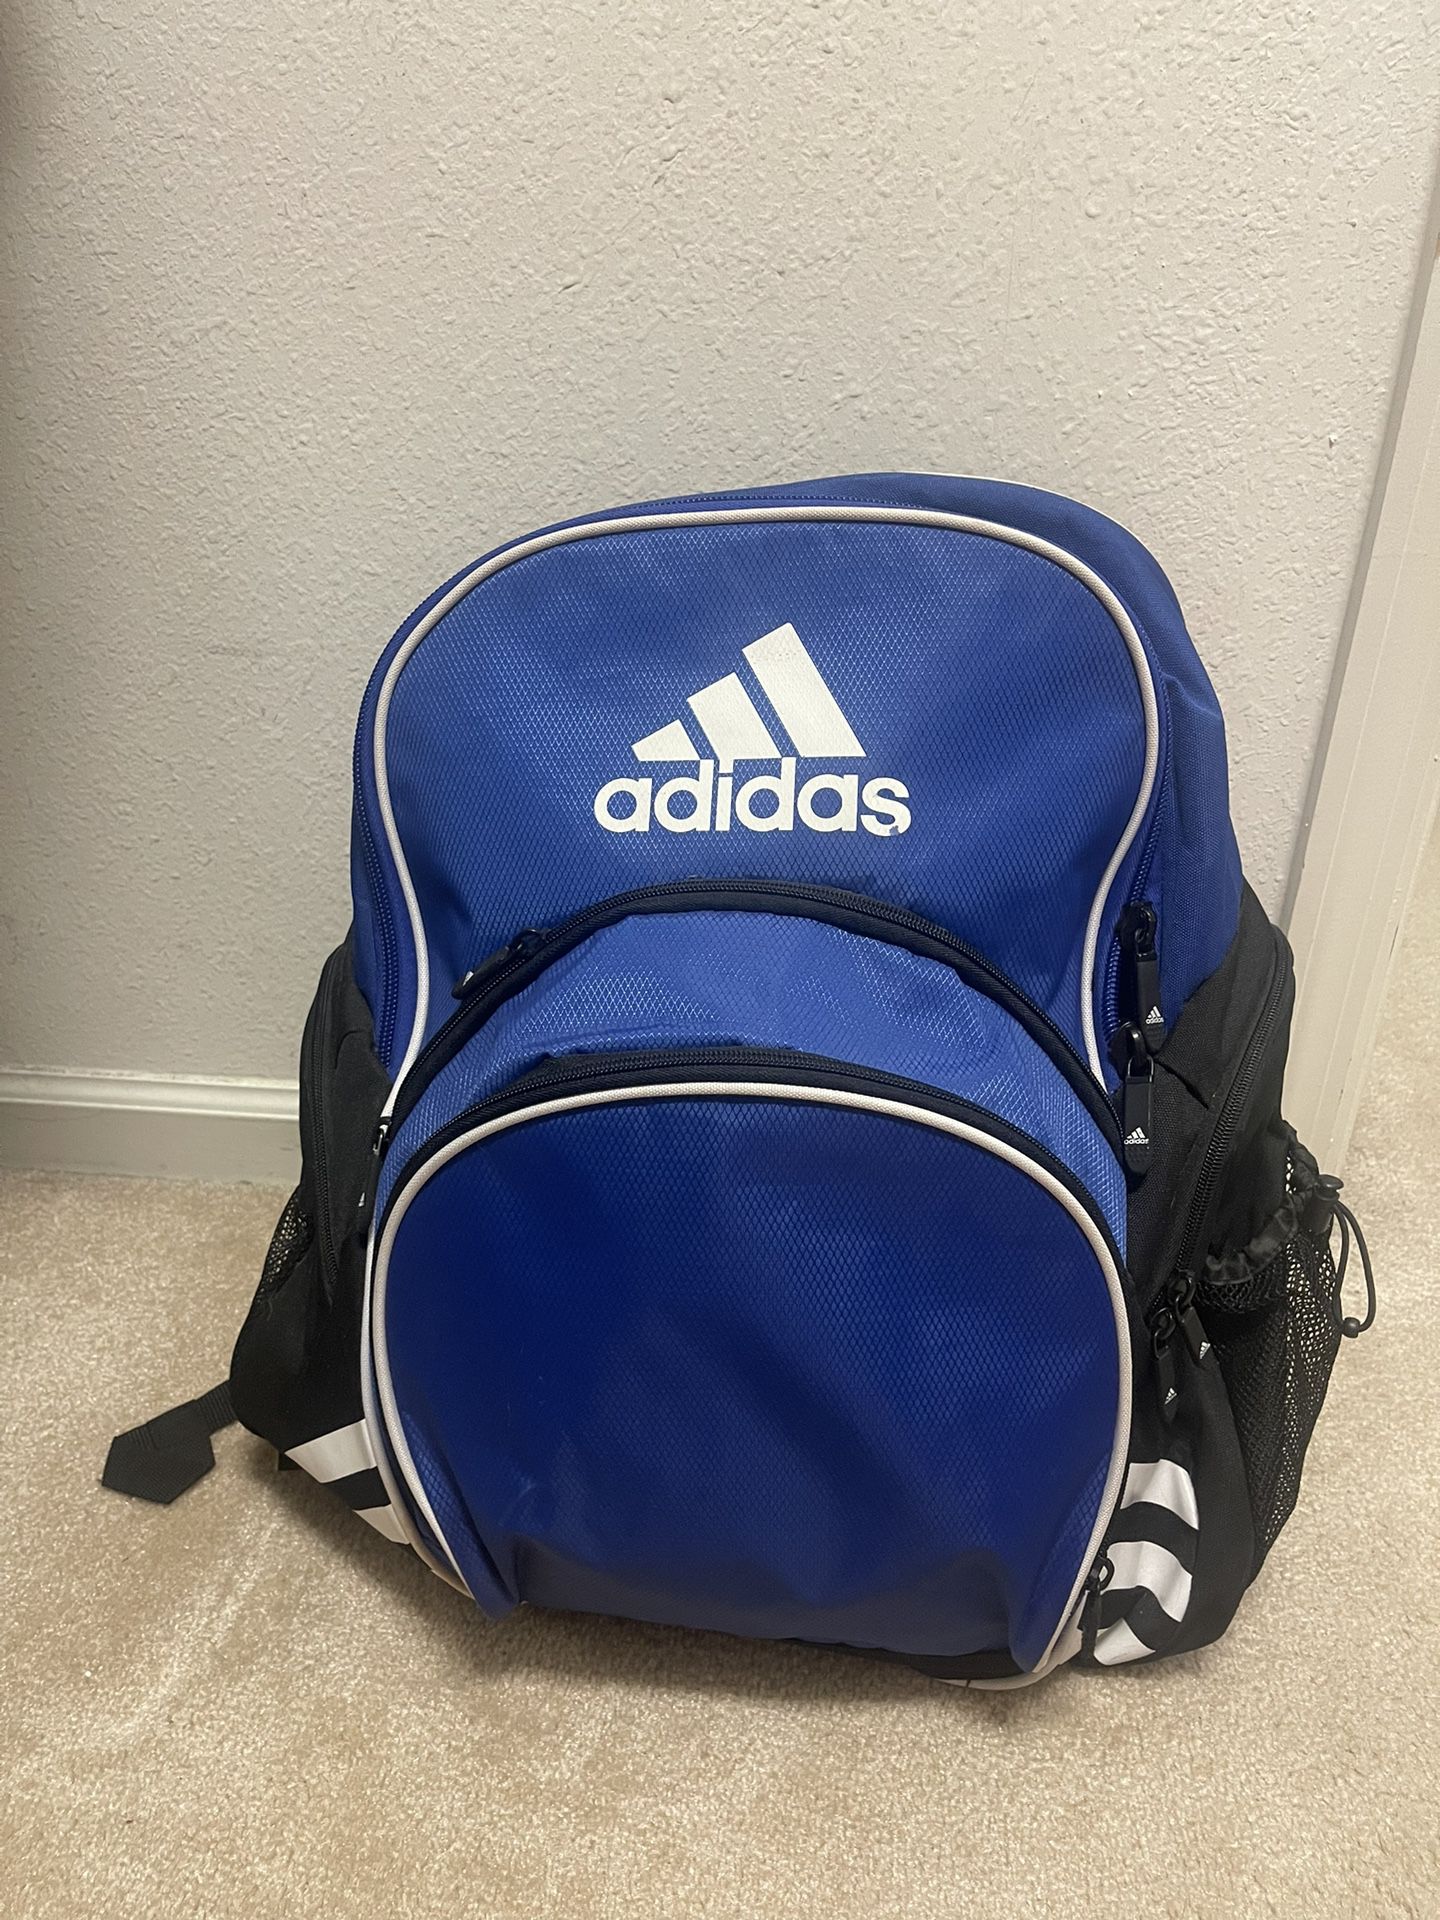 Adidas Ball Backpack